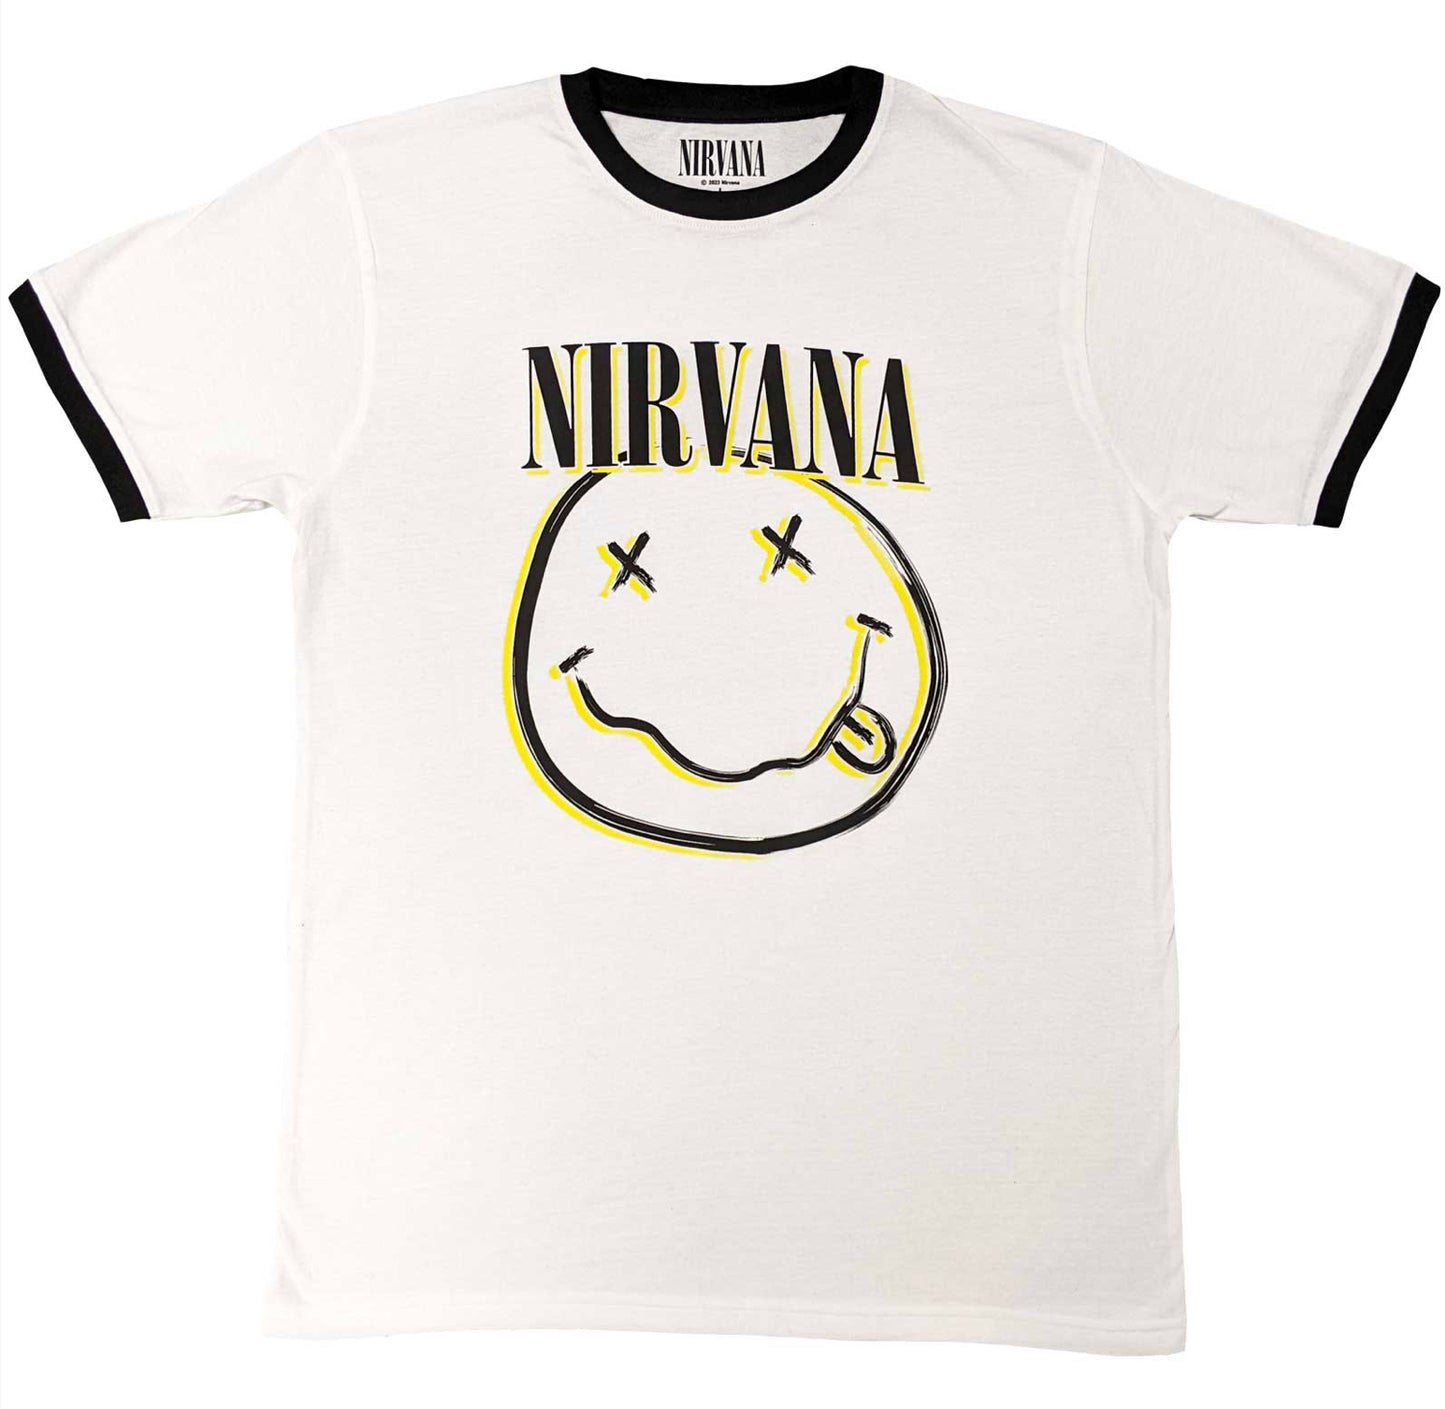 Nirvana T-shirts